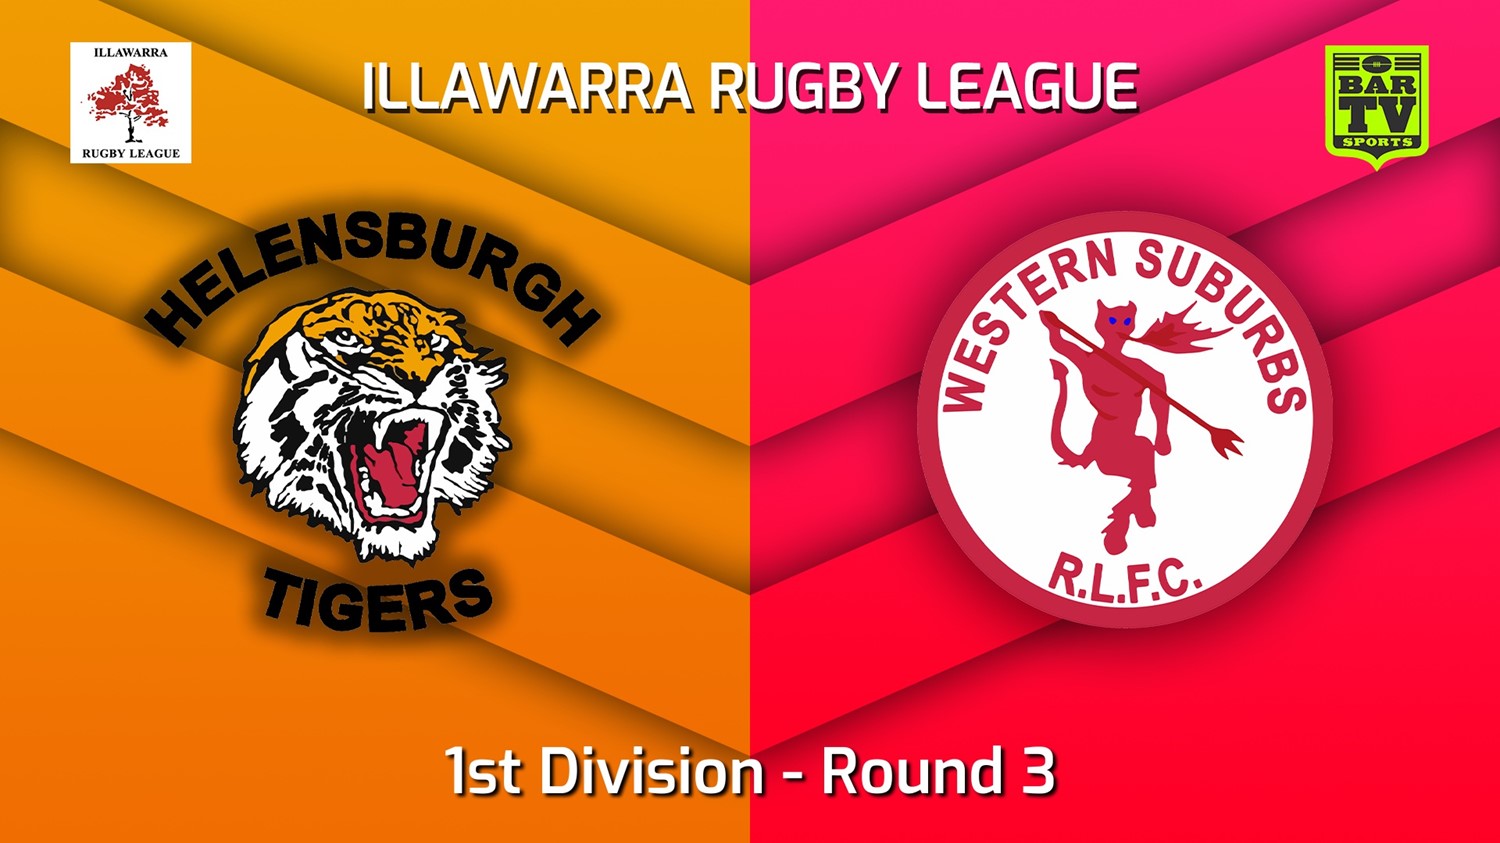 220507-Illawarra Round 3 - 1st Division - Helensburgh Tigers v Western Suburbs Devils Slate Image